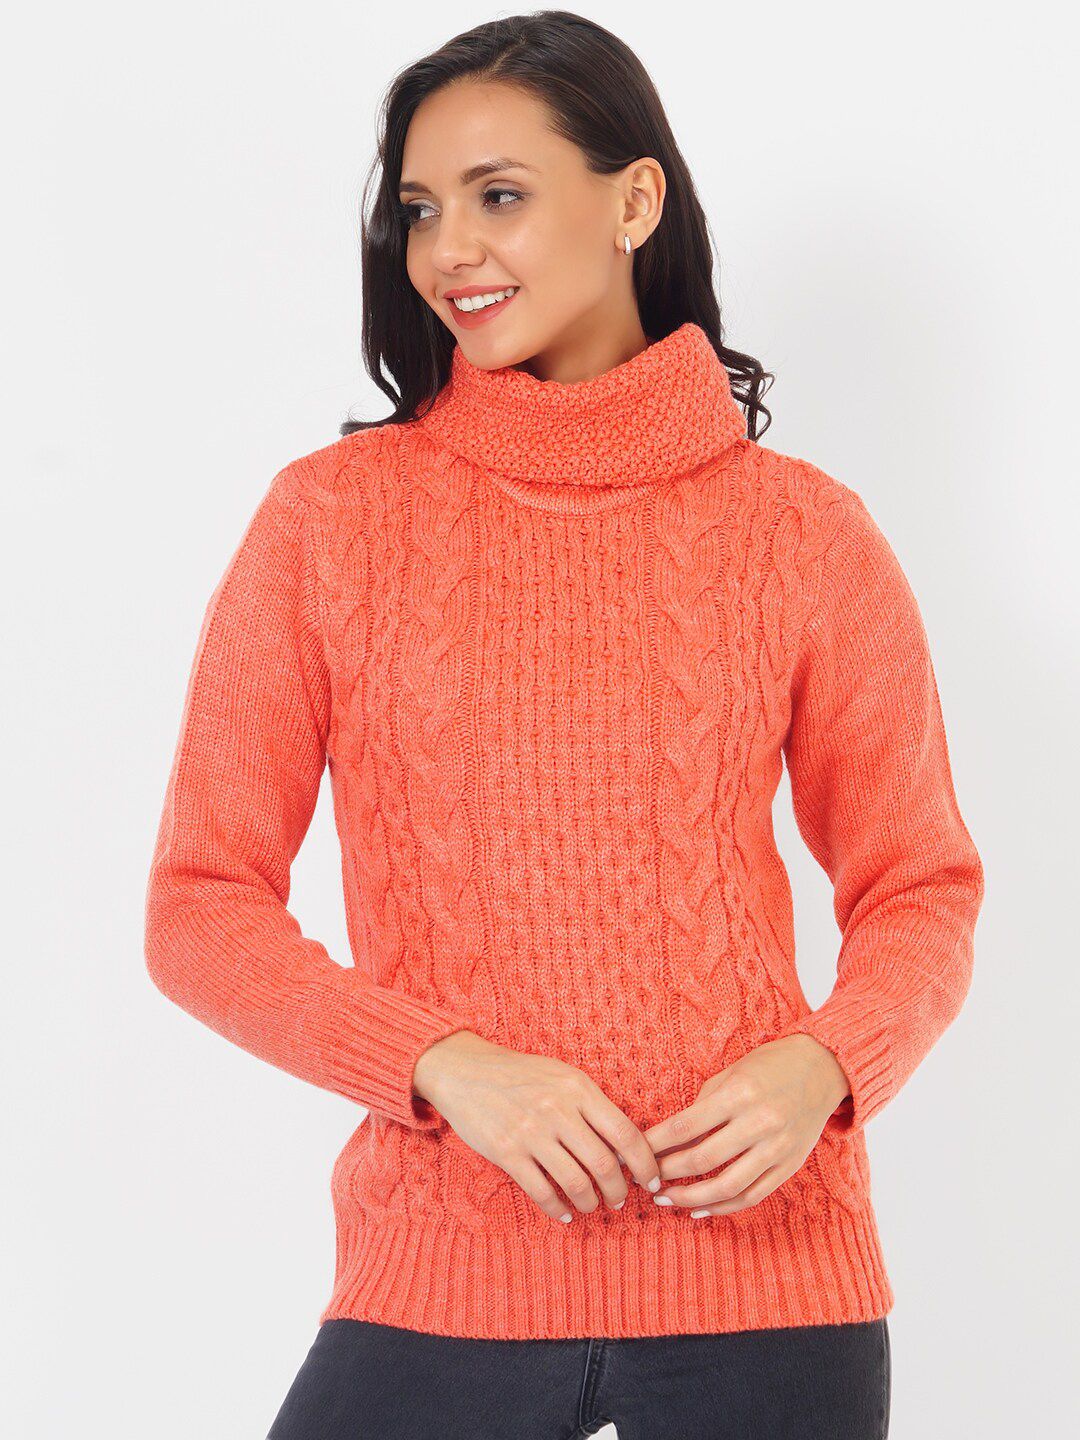 JoE Hazel Women Orange Cable Knit Acrylic Pullover Sweater Price in India